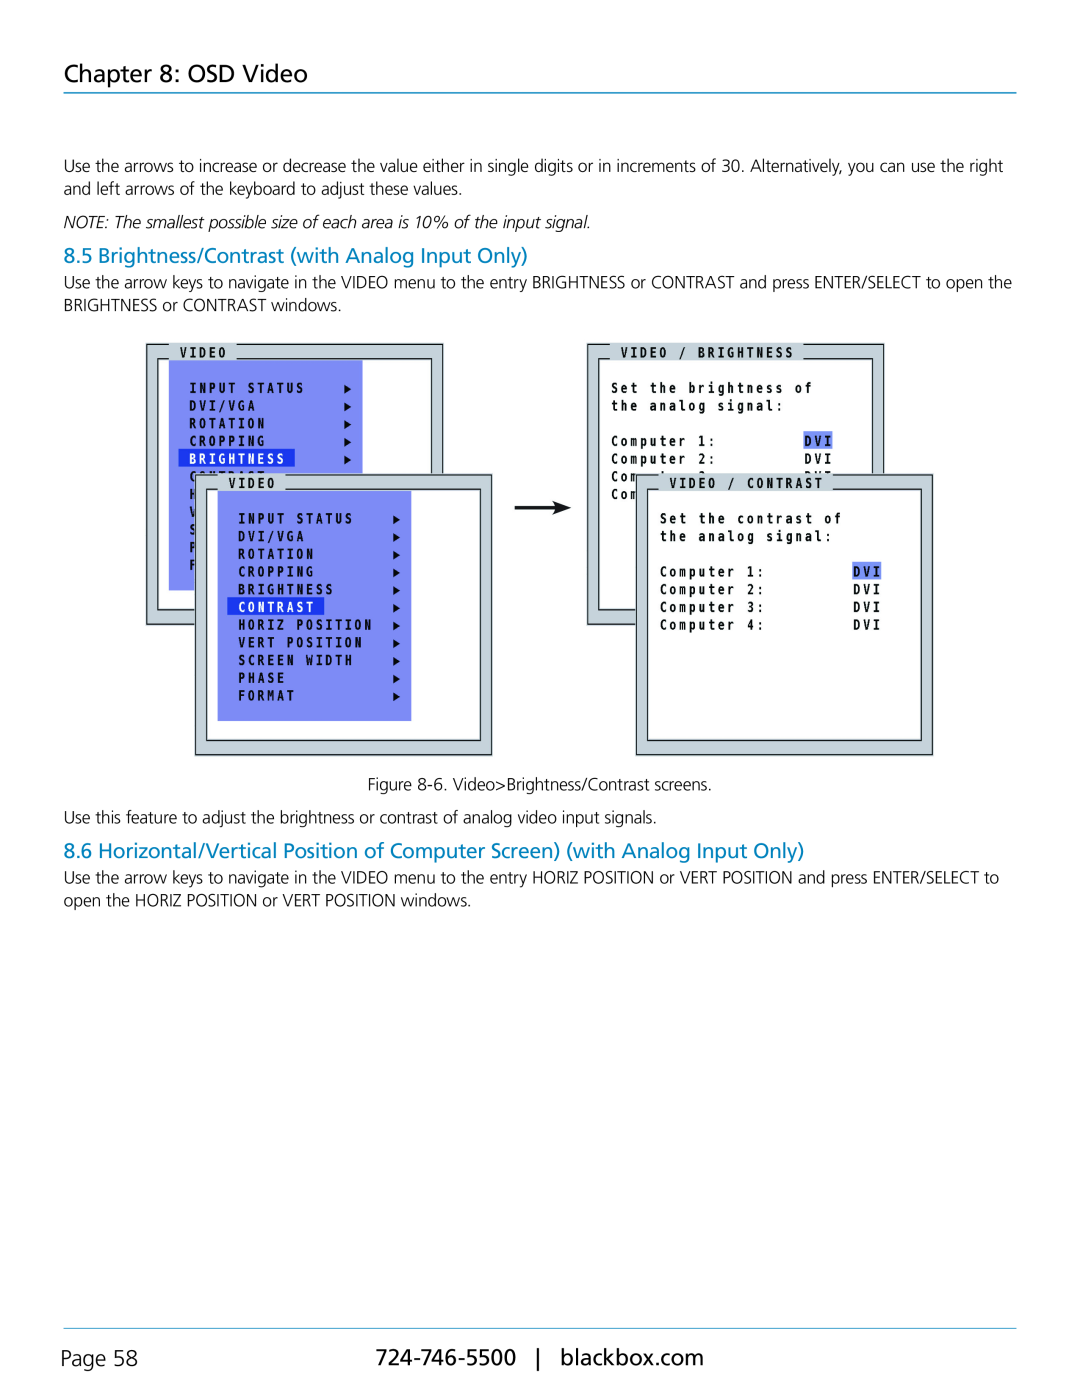 Black Box KVP40004A, servswitch 4site flex manual Brightness/Contrast with Analog Input Only, OSD Video, Page 